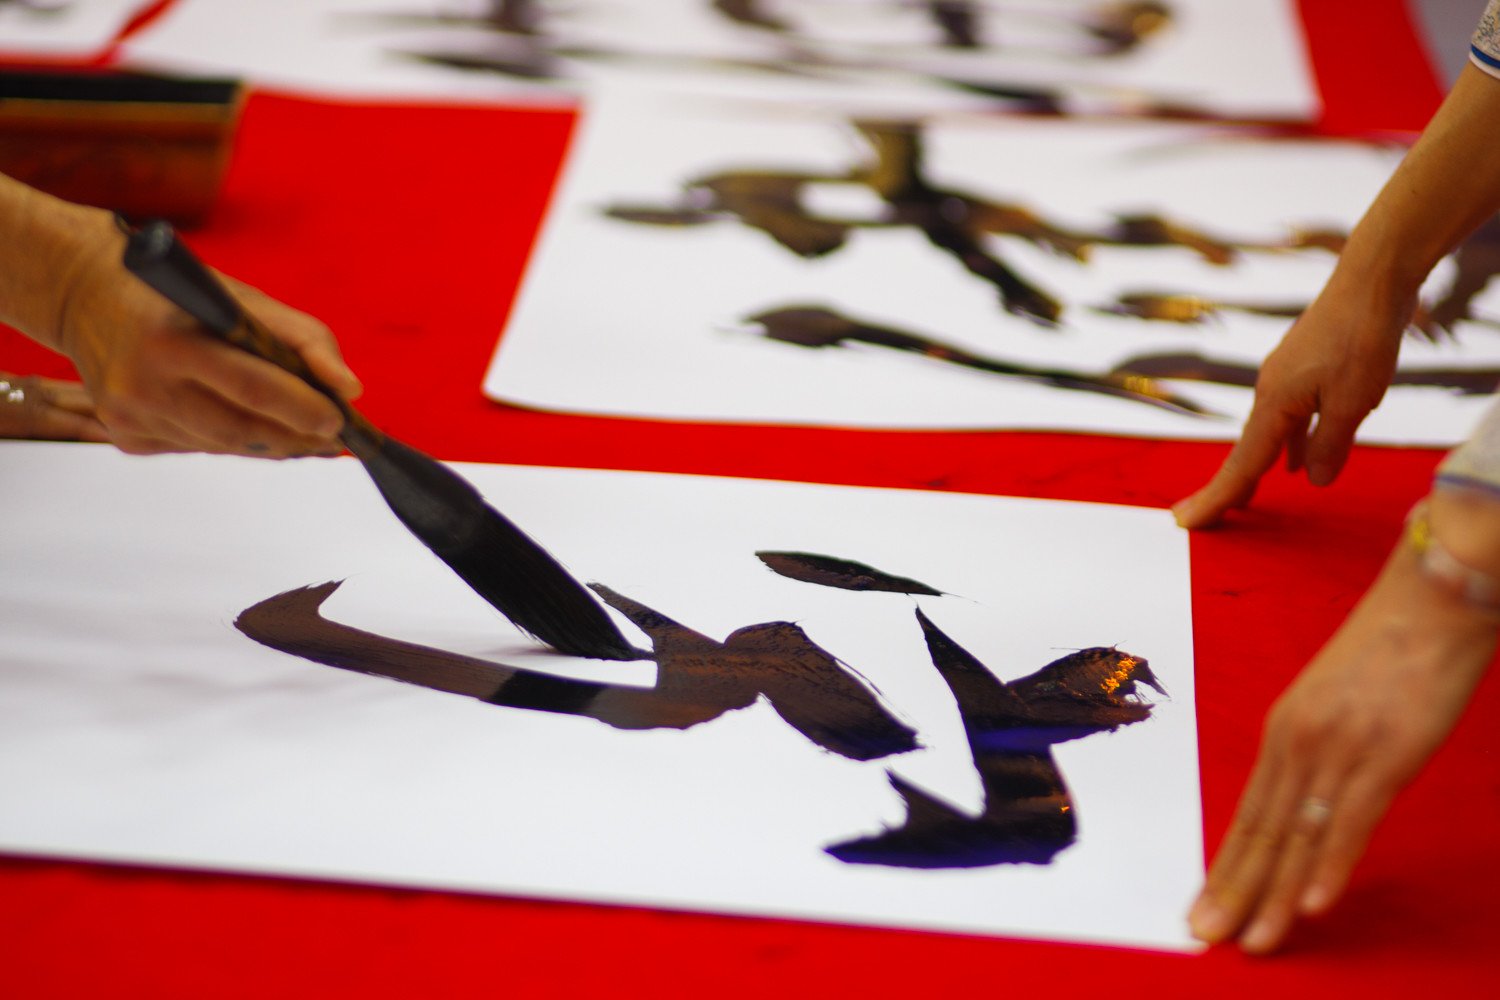 Calligraphy still popular in Japan